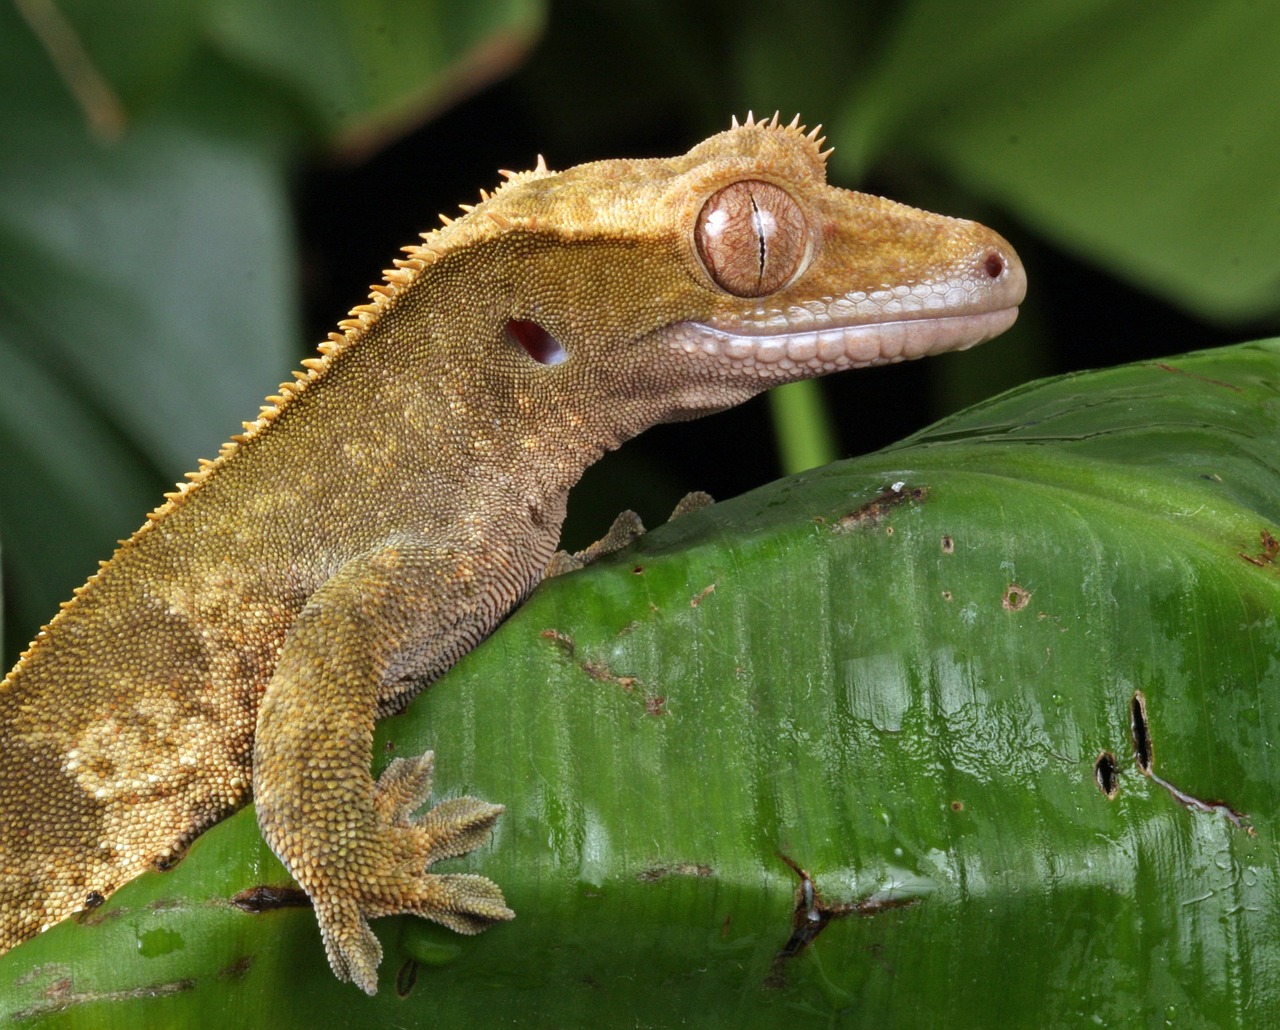 Crested Gecko Enclosure Size